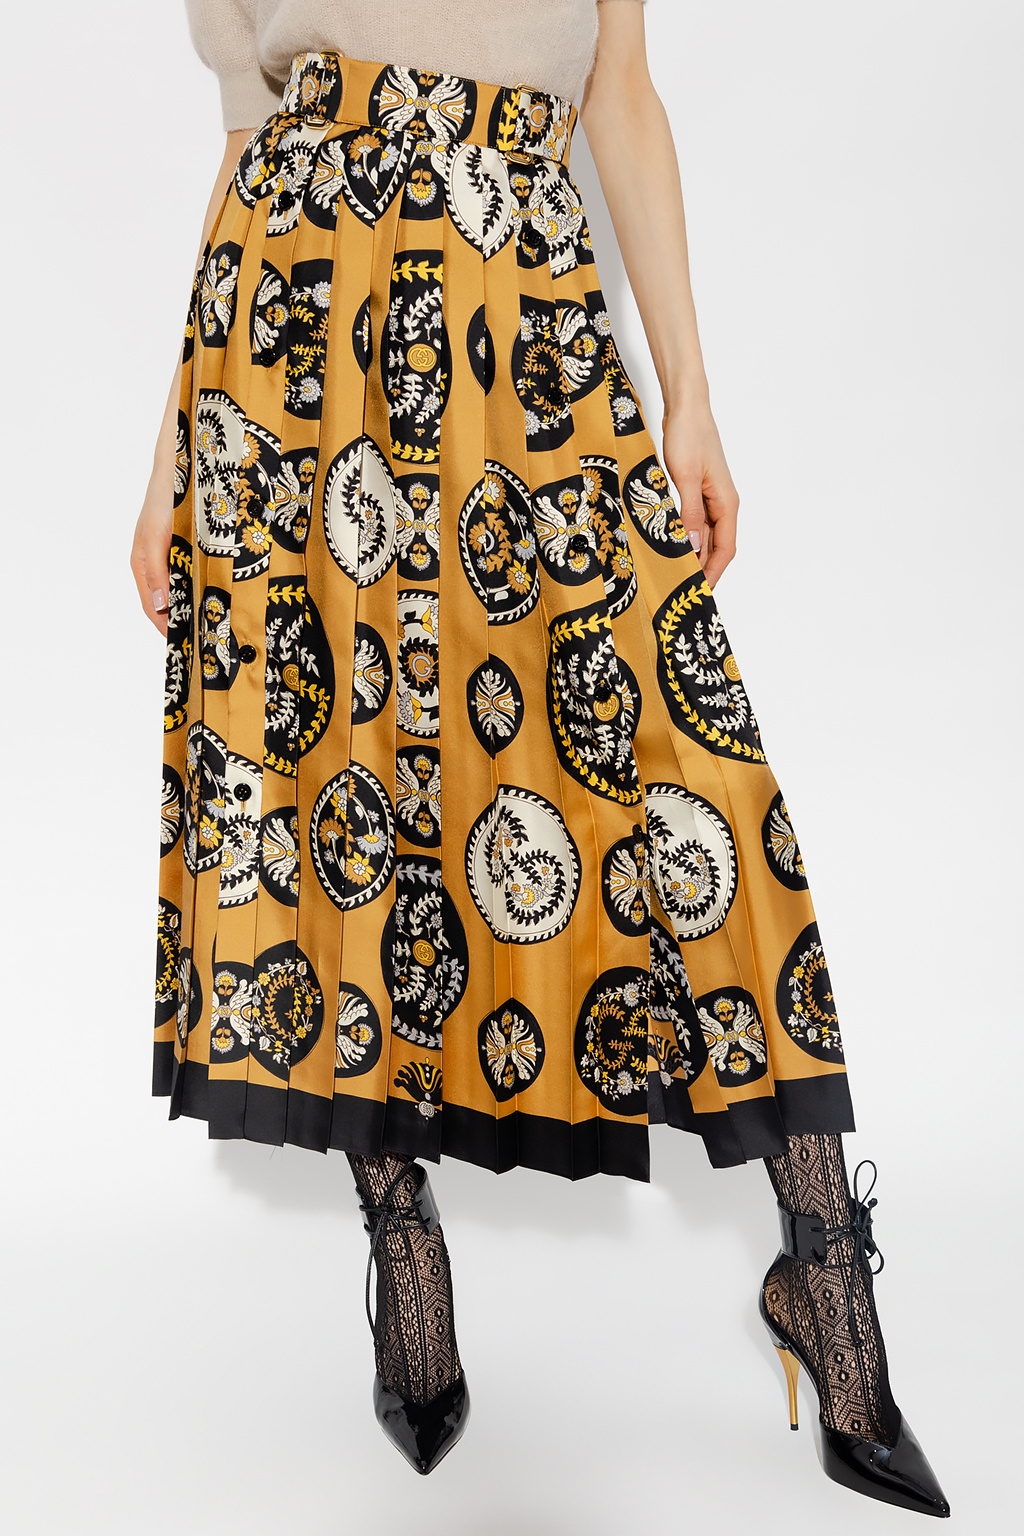 Gucci medium skirt